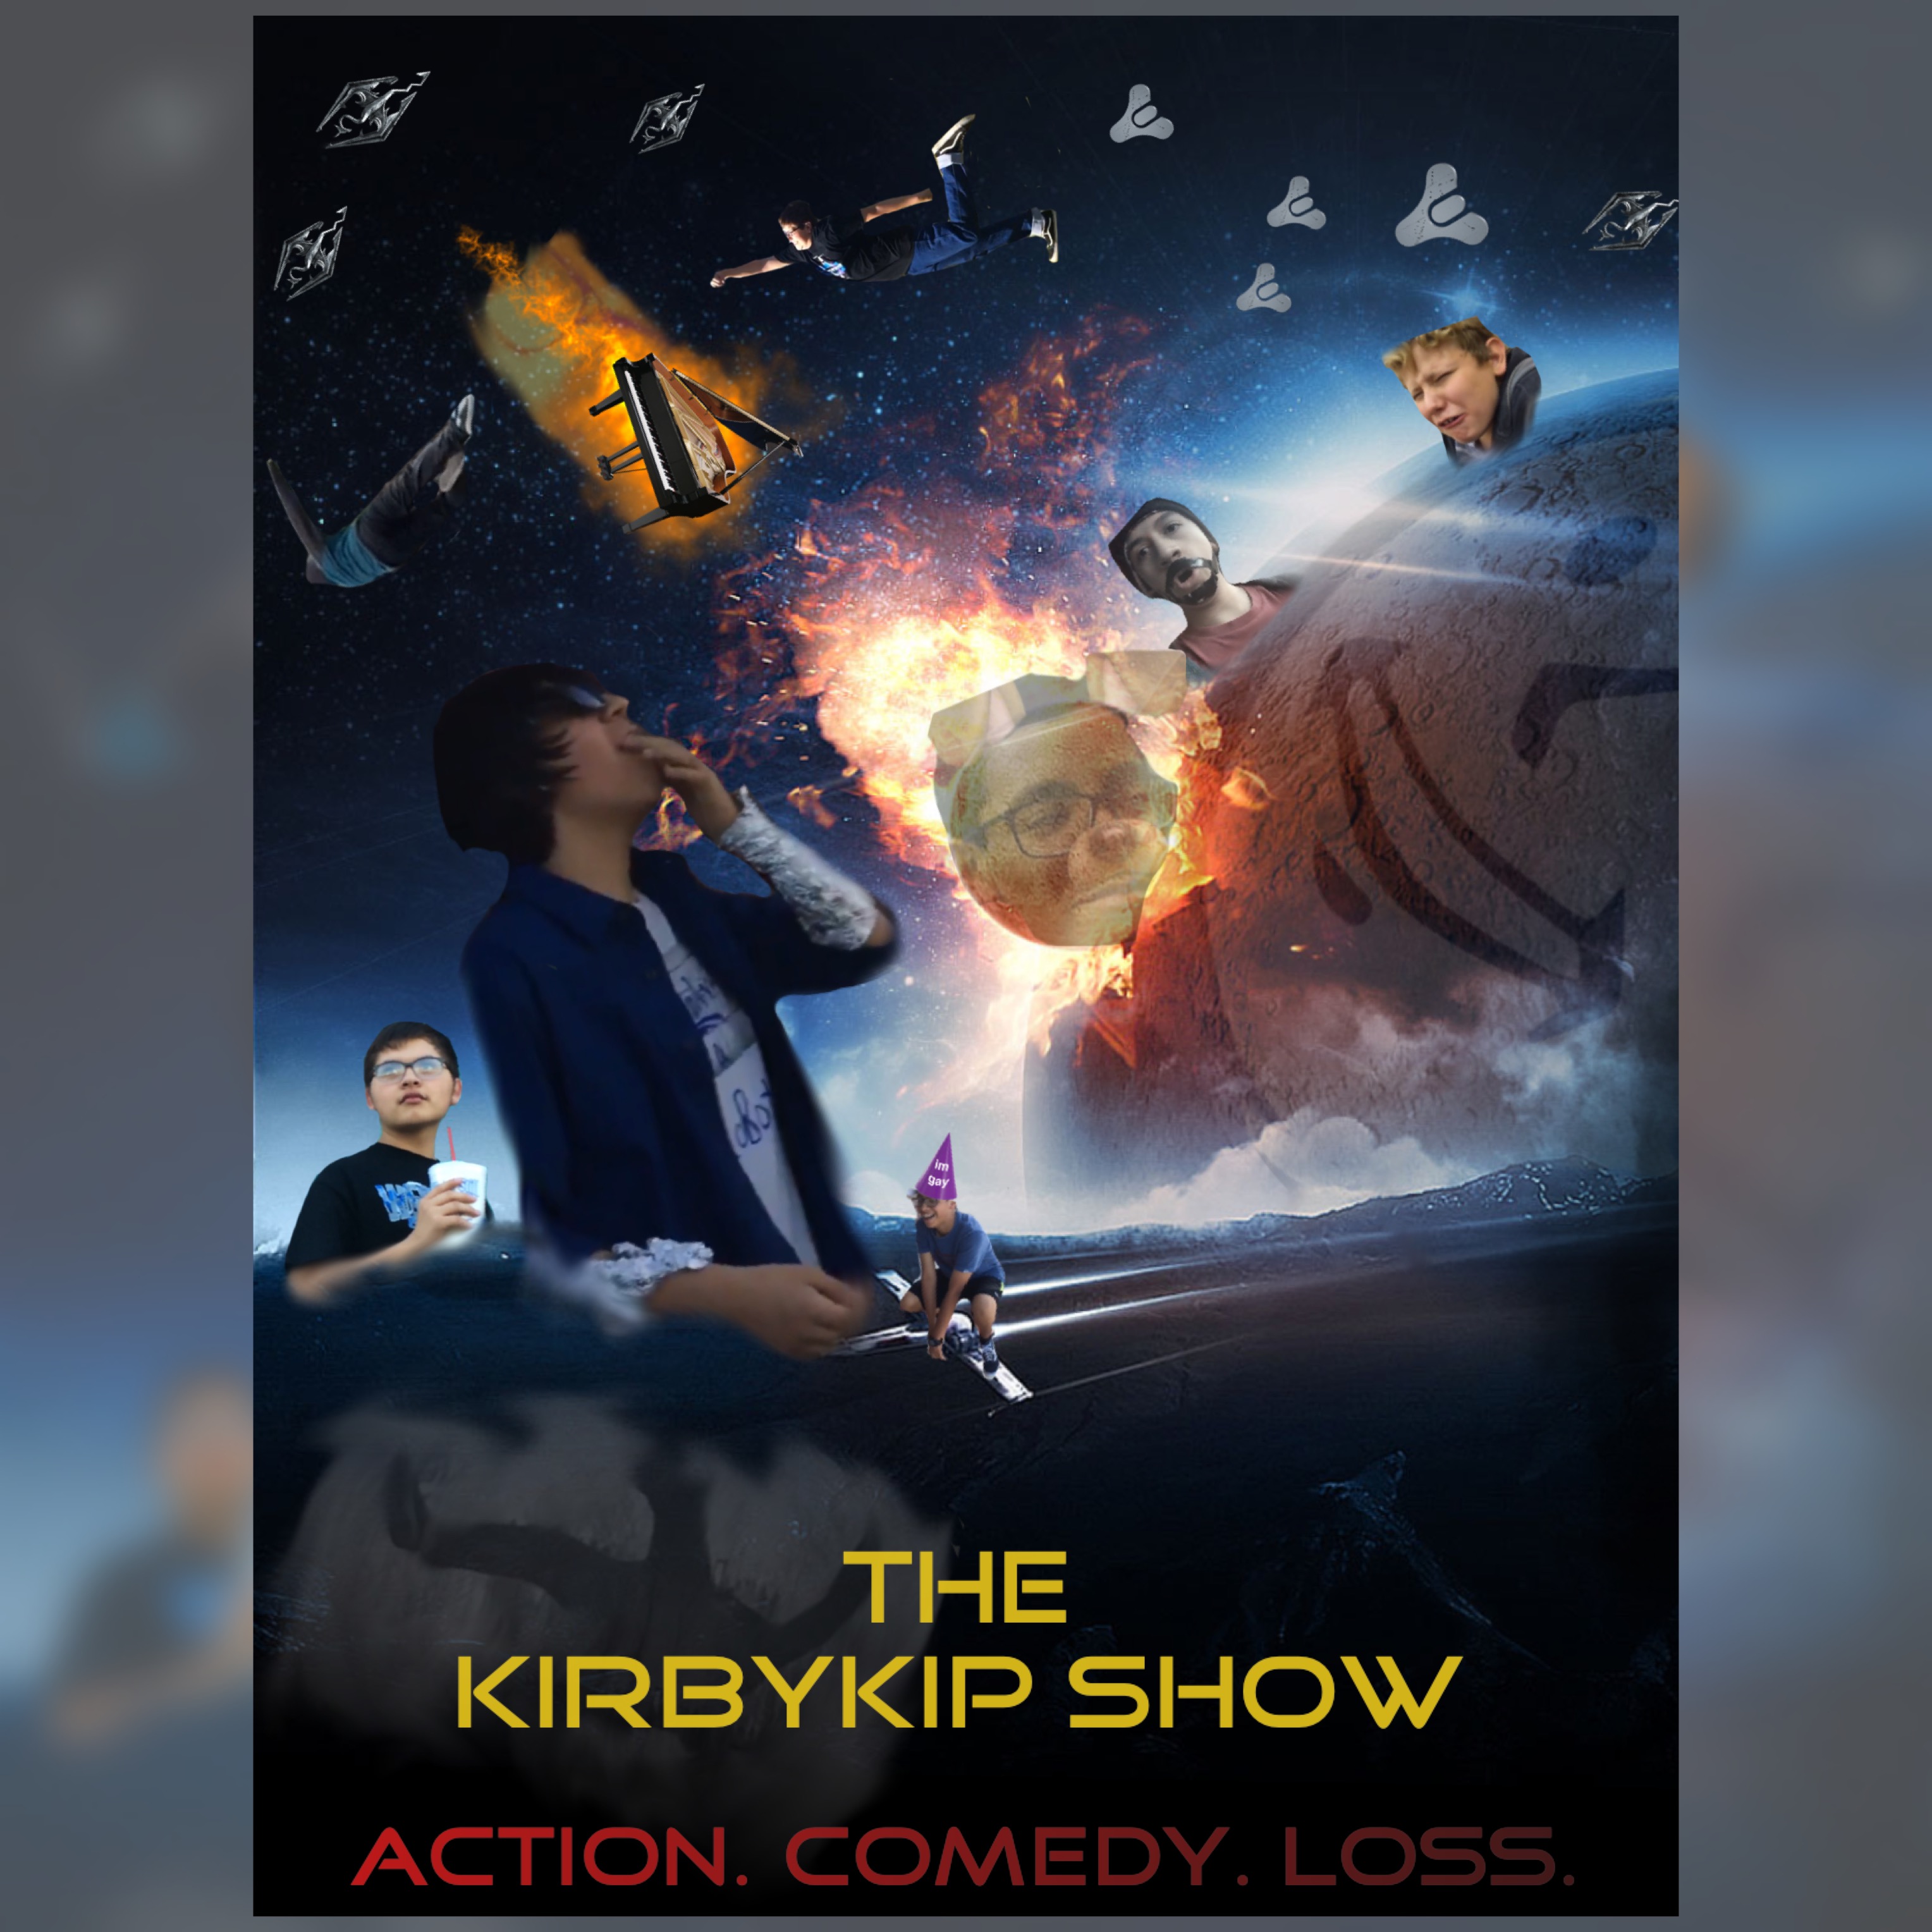 The KirbyKip Show